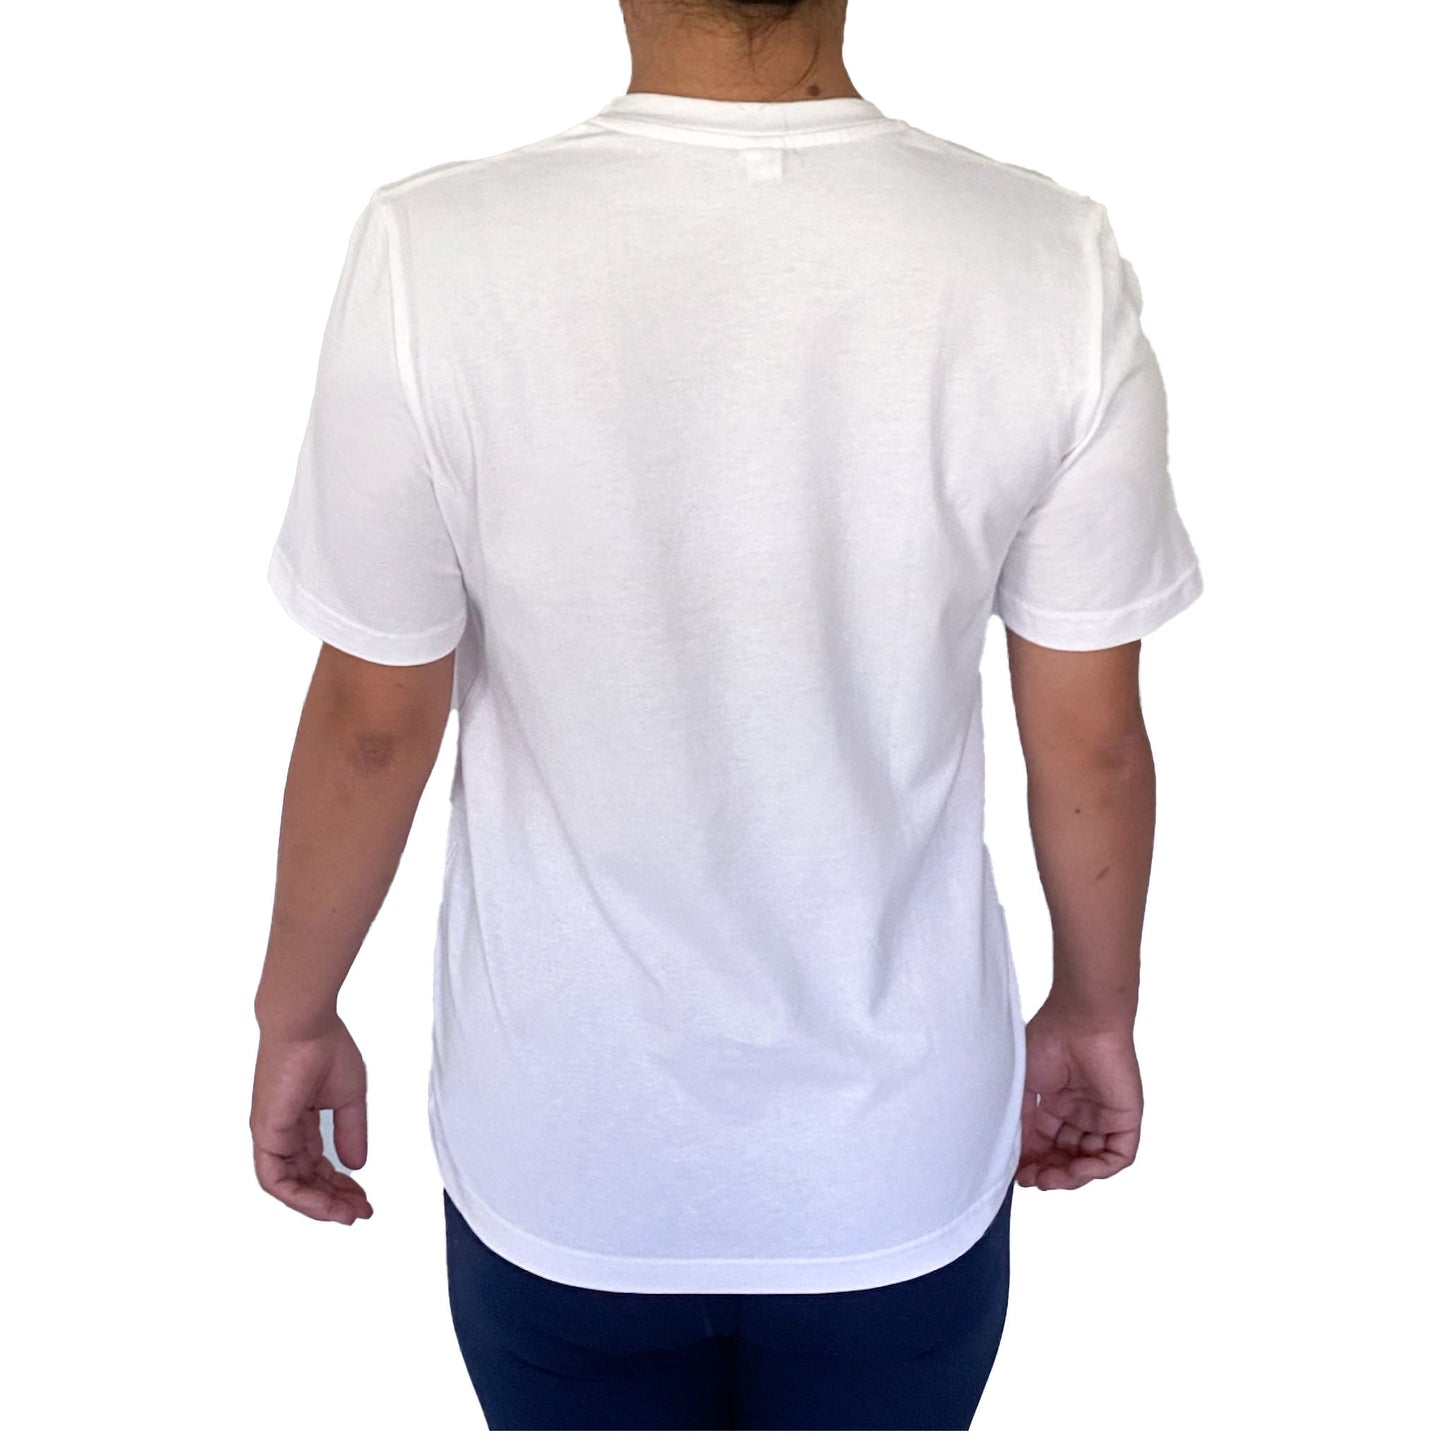 Ethical organic unisex t-shirt White V neck Classic range